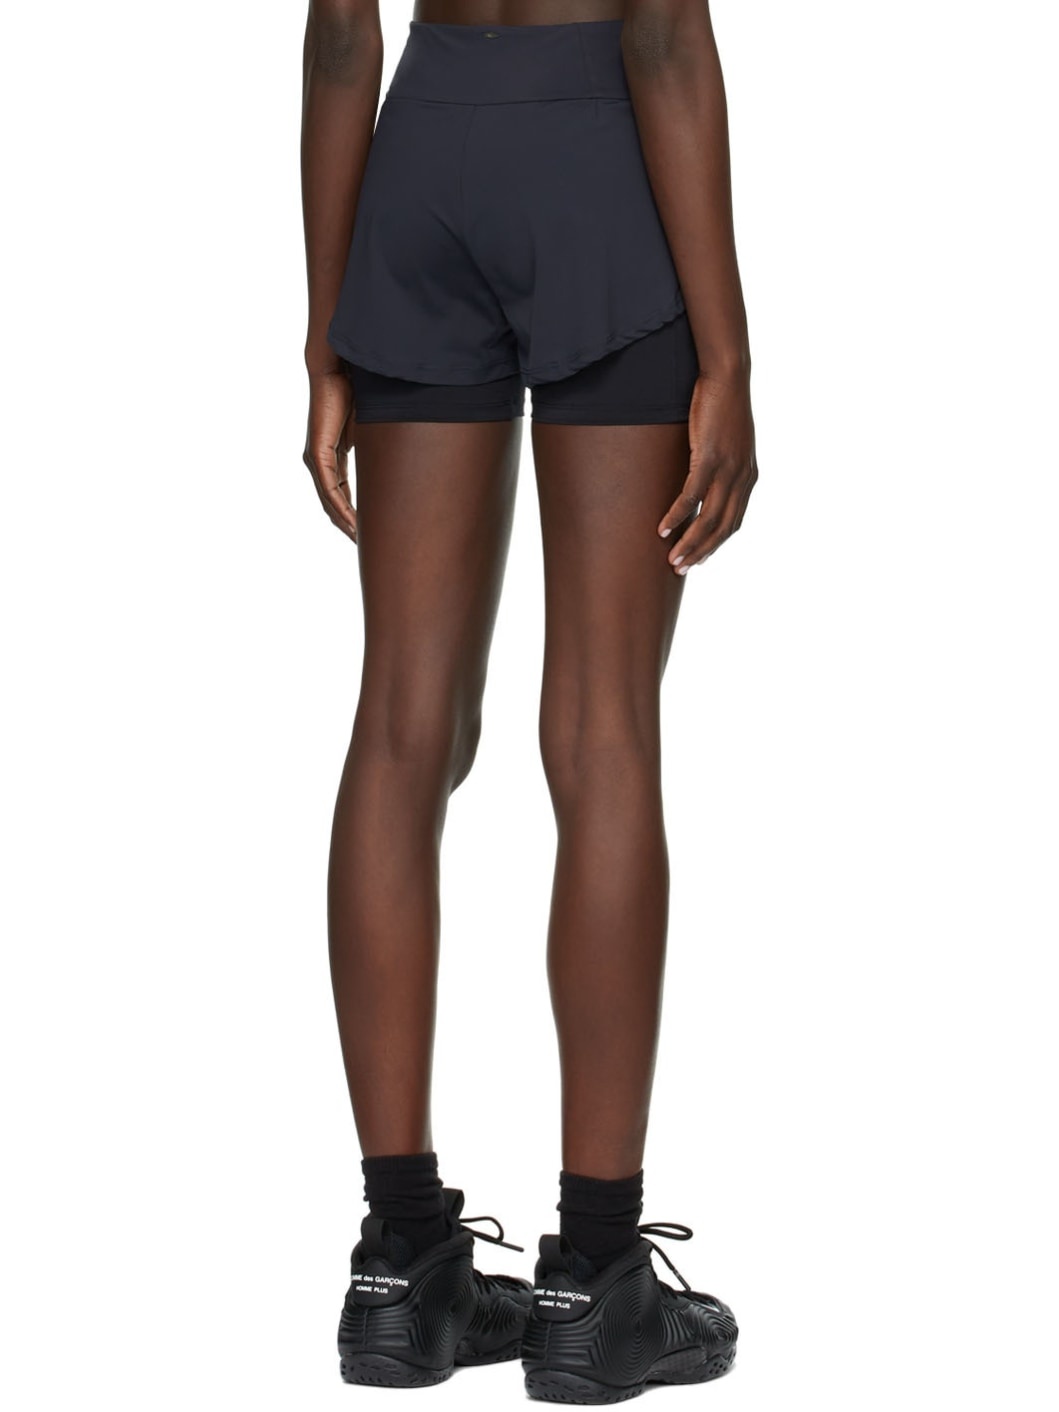 SSENSE Exclusive Black Spandex Sport Shorts - 3